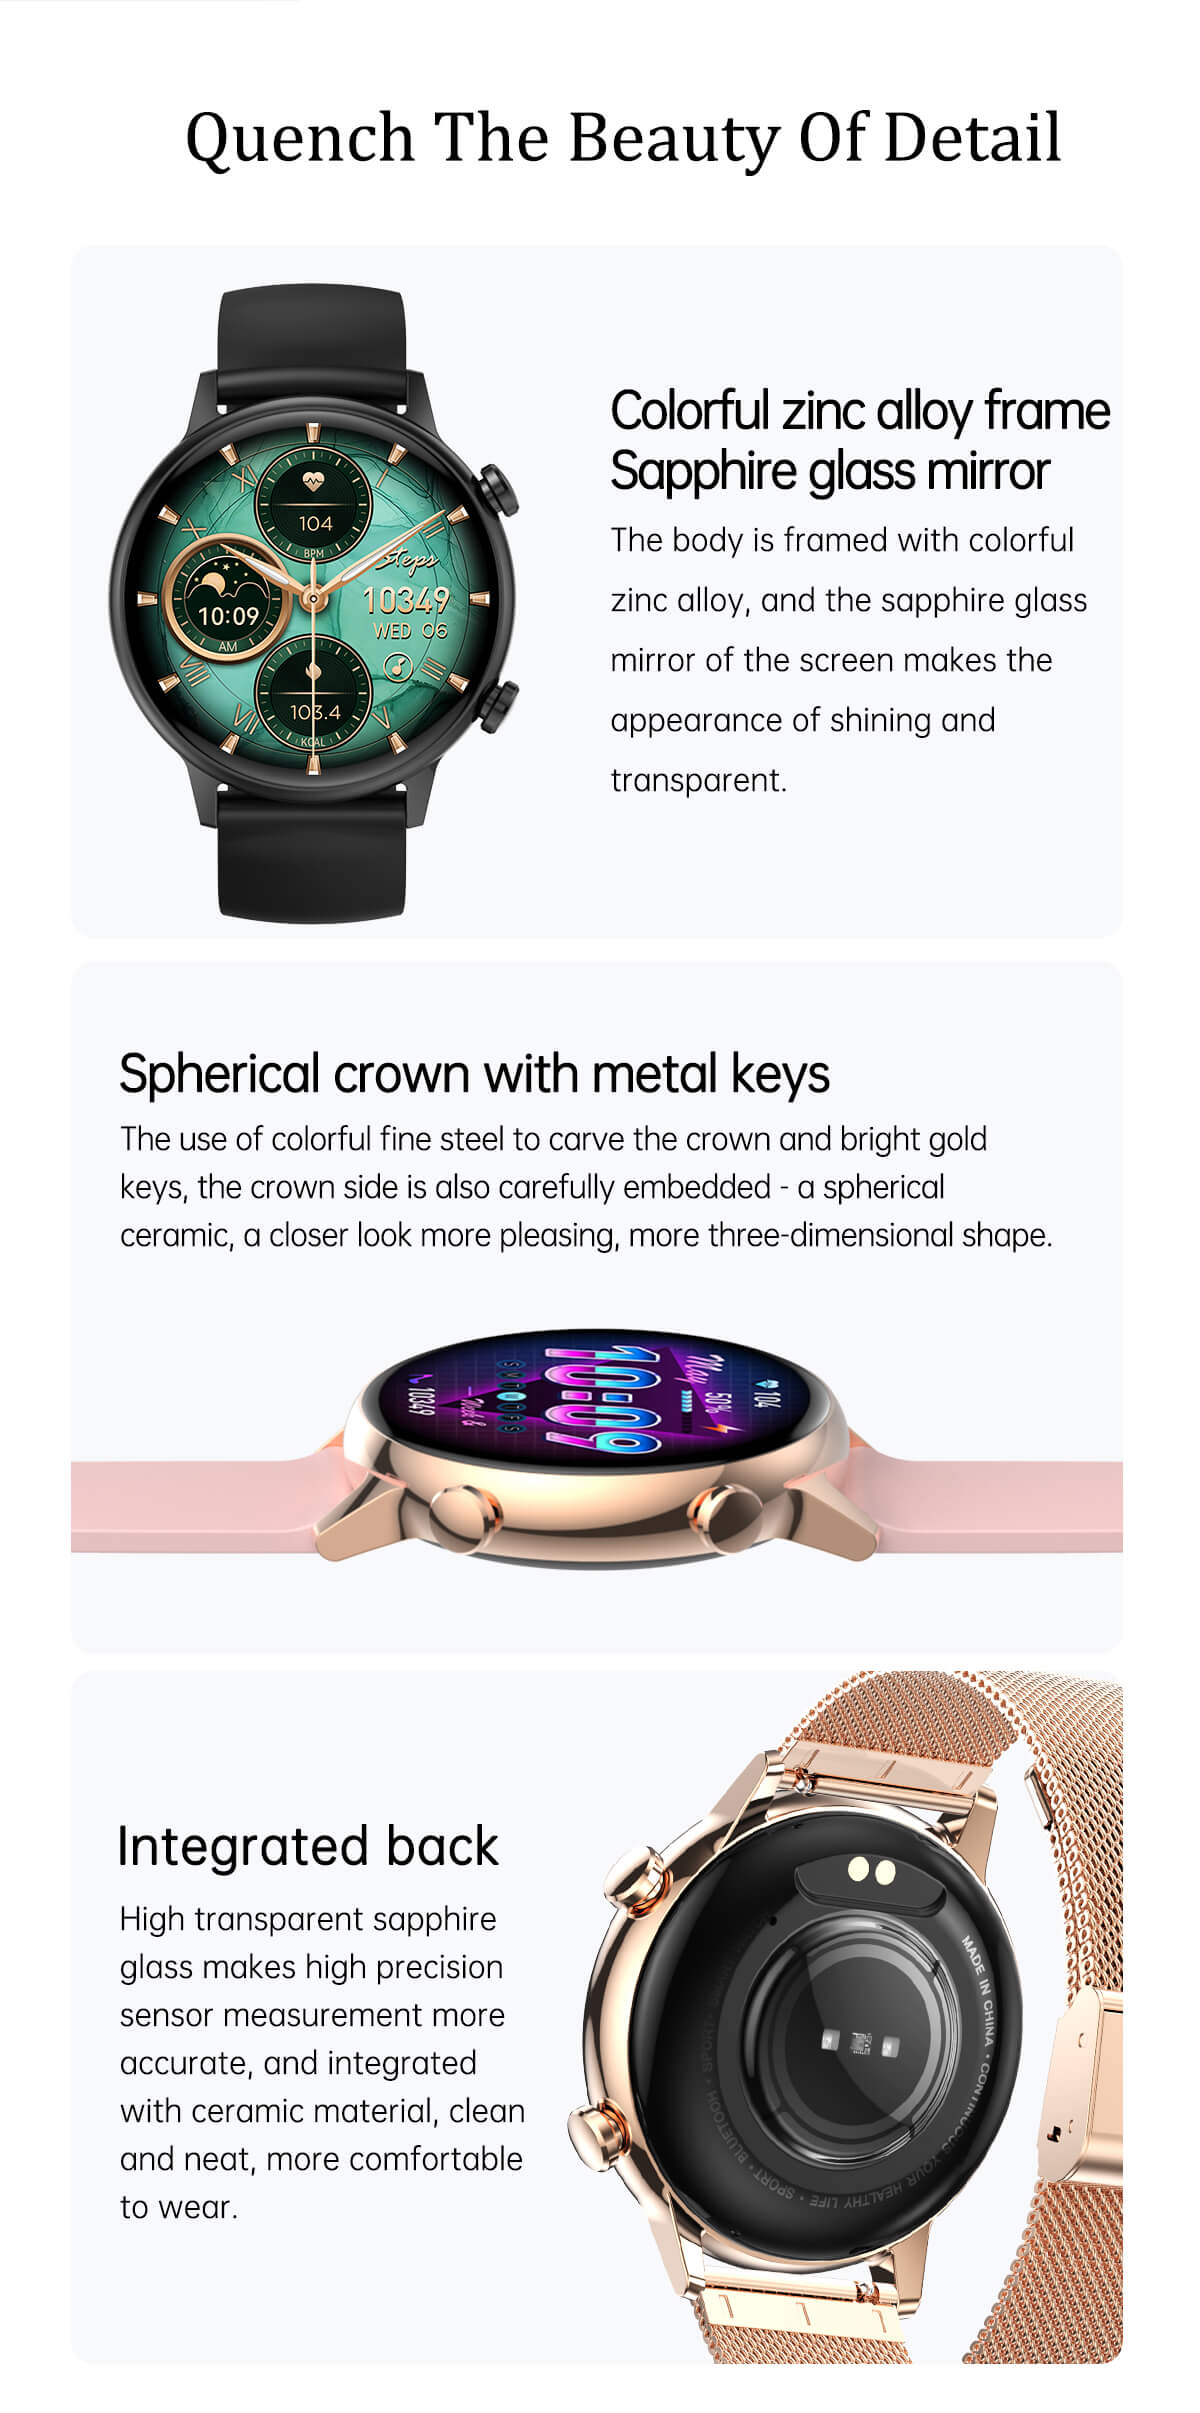 HK39 Smart Watch AMOLED Screen-Shenzhen Shengye Technology Co.,Ltd